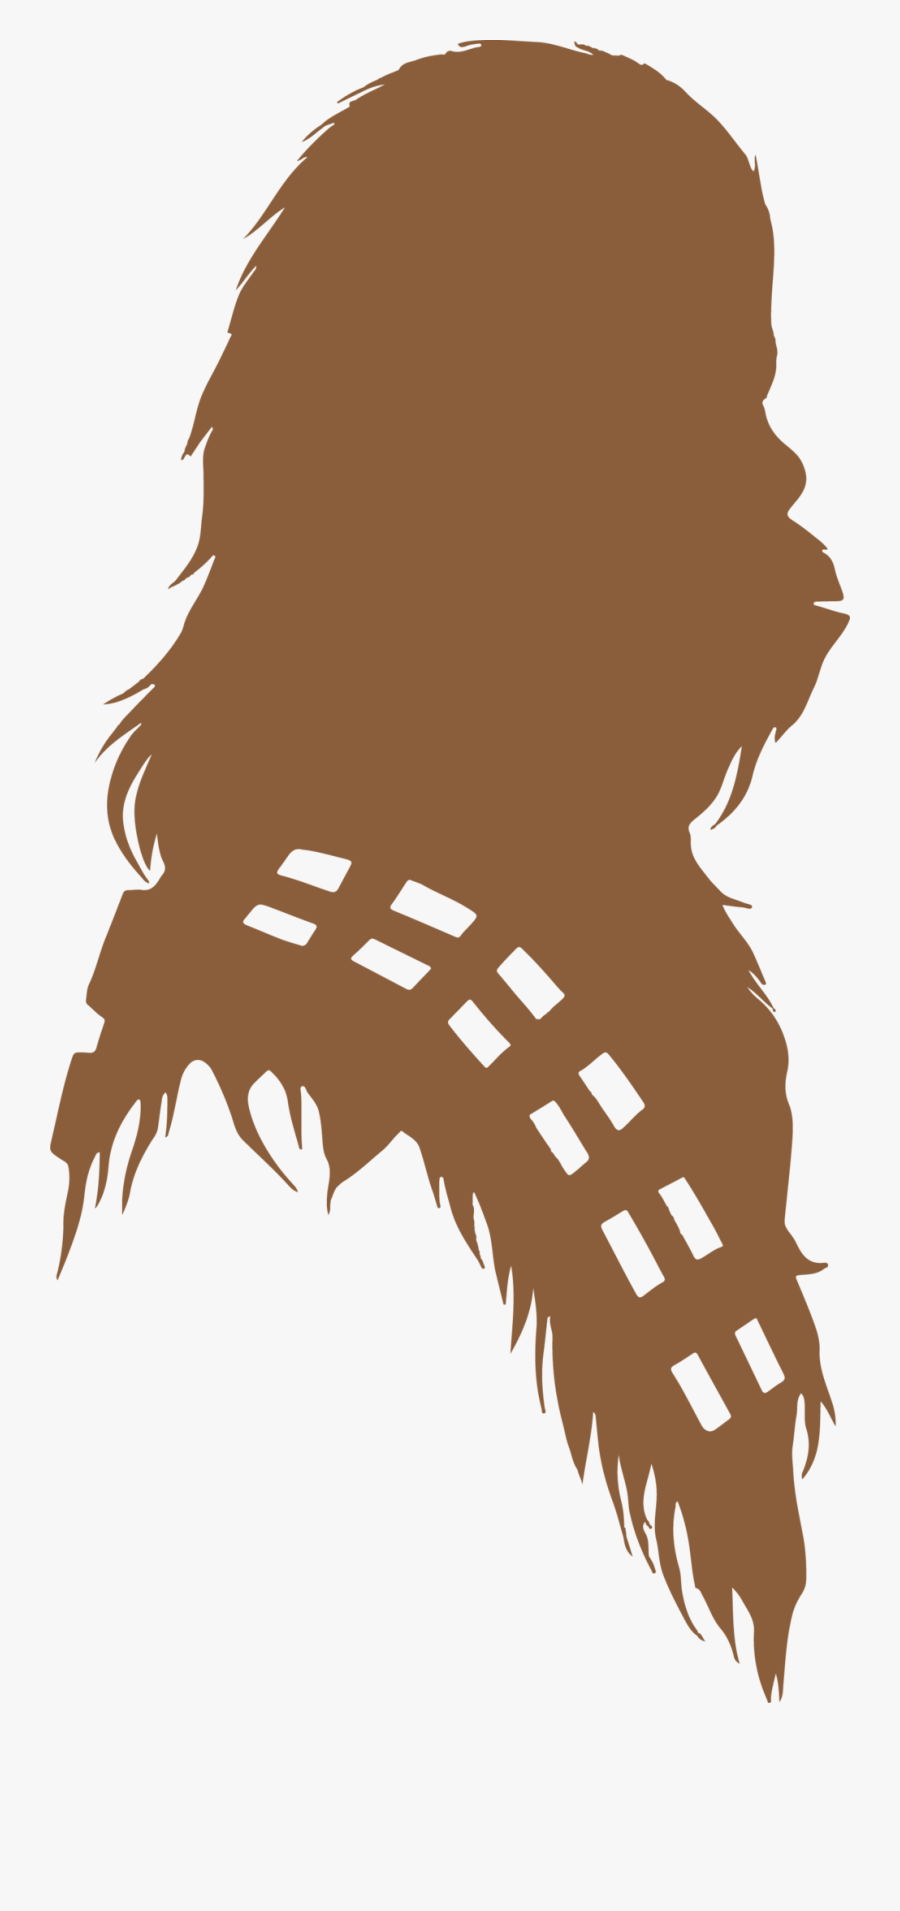 Download Chewbacca Silhouette - Star Wars Chewbacca Silhouette , Free Transparent Clipart - ClipartKey